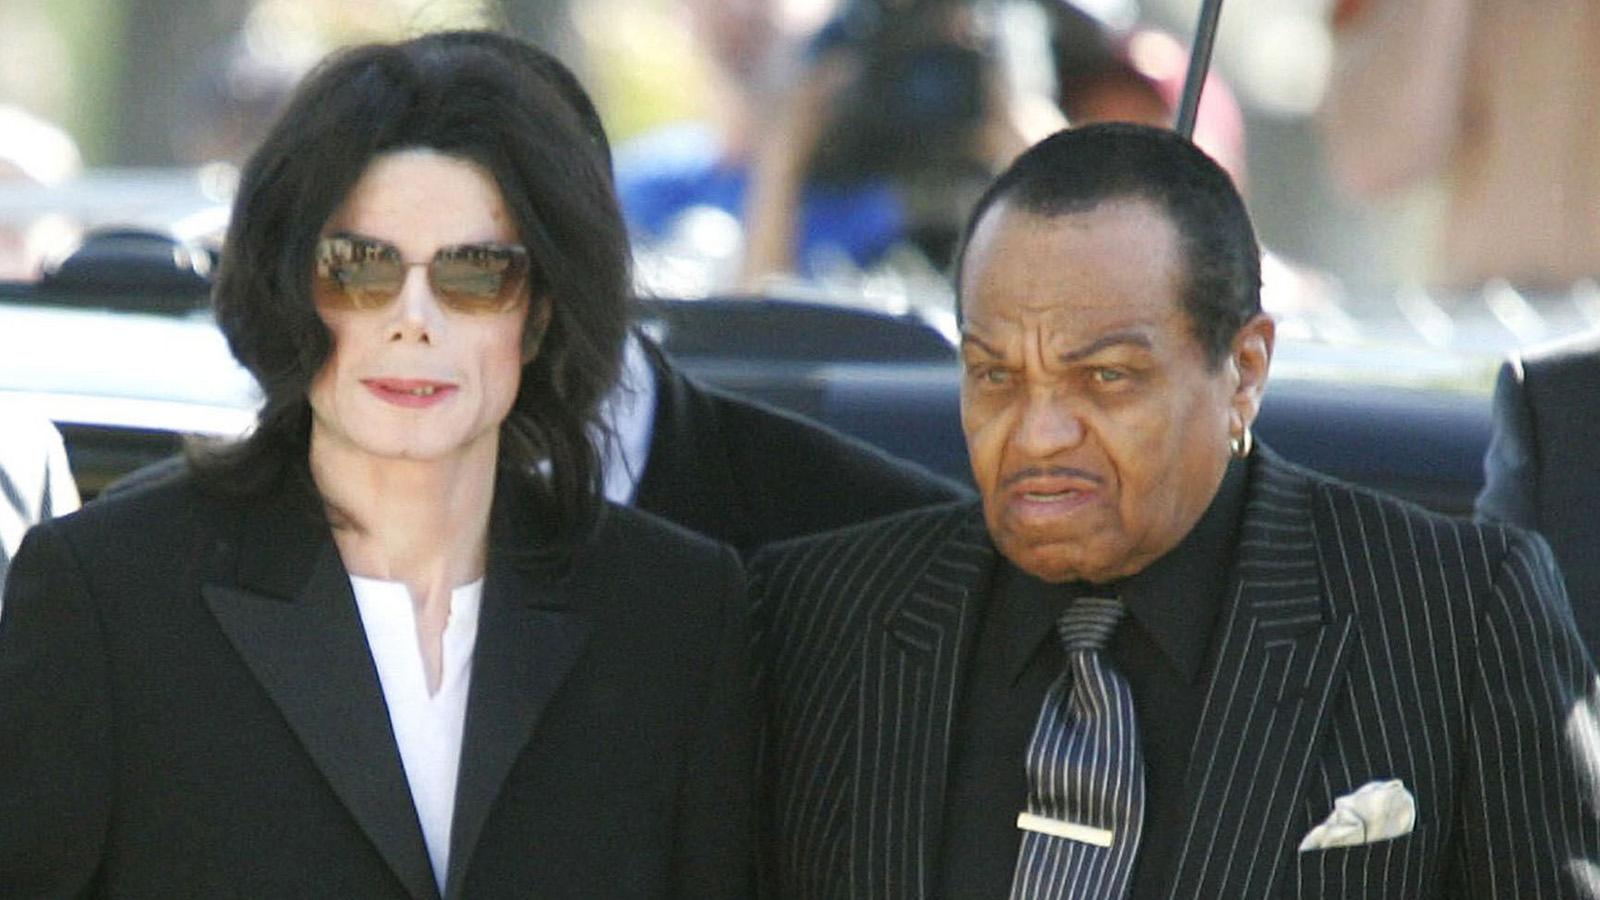 Michael med pappa Joe.